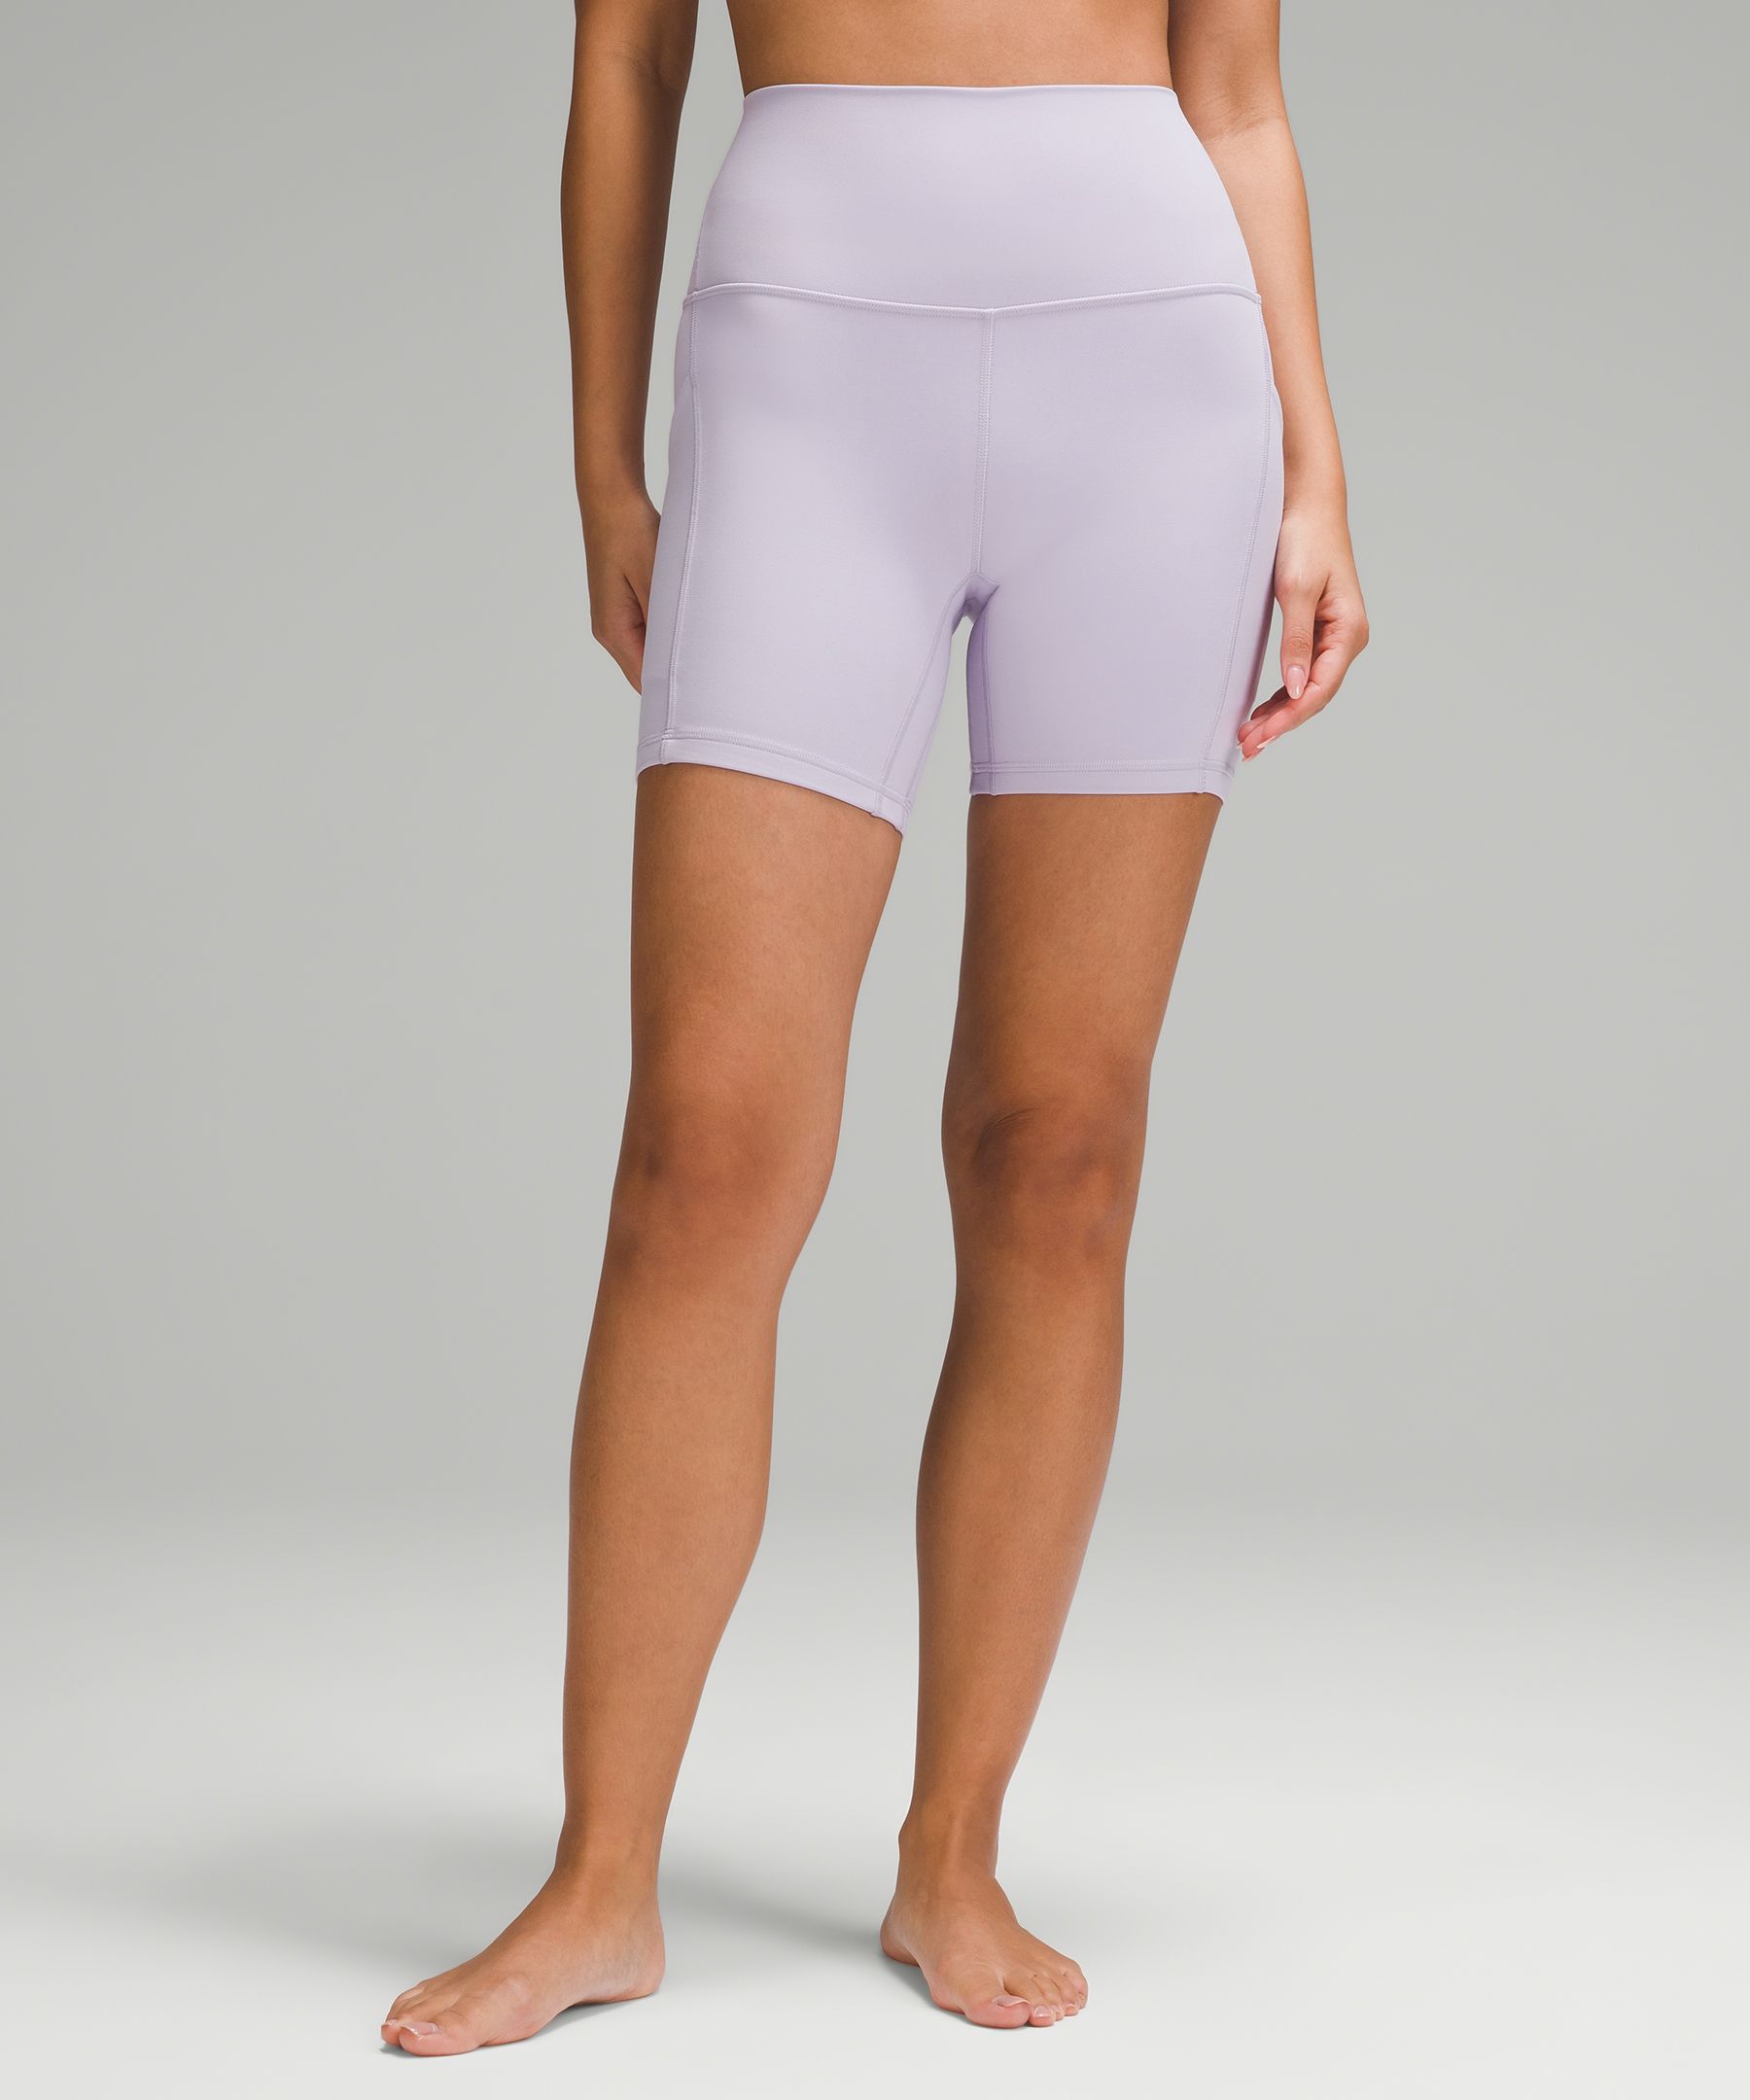 lululemon Align™ High-Rise Short with Pockets 6, Women's Shorts